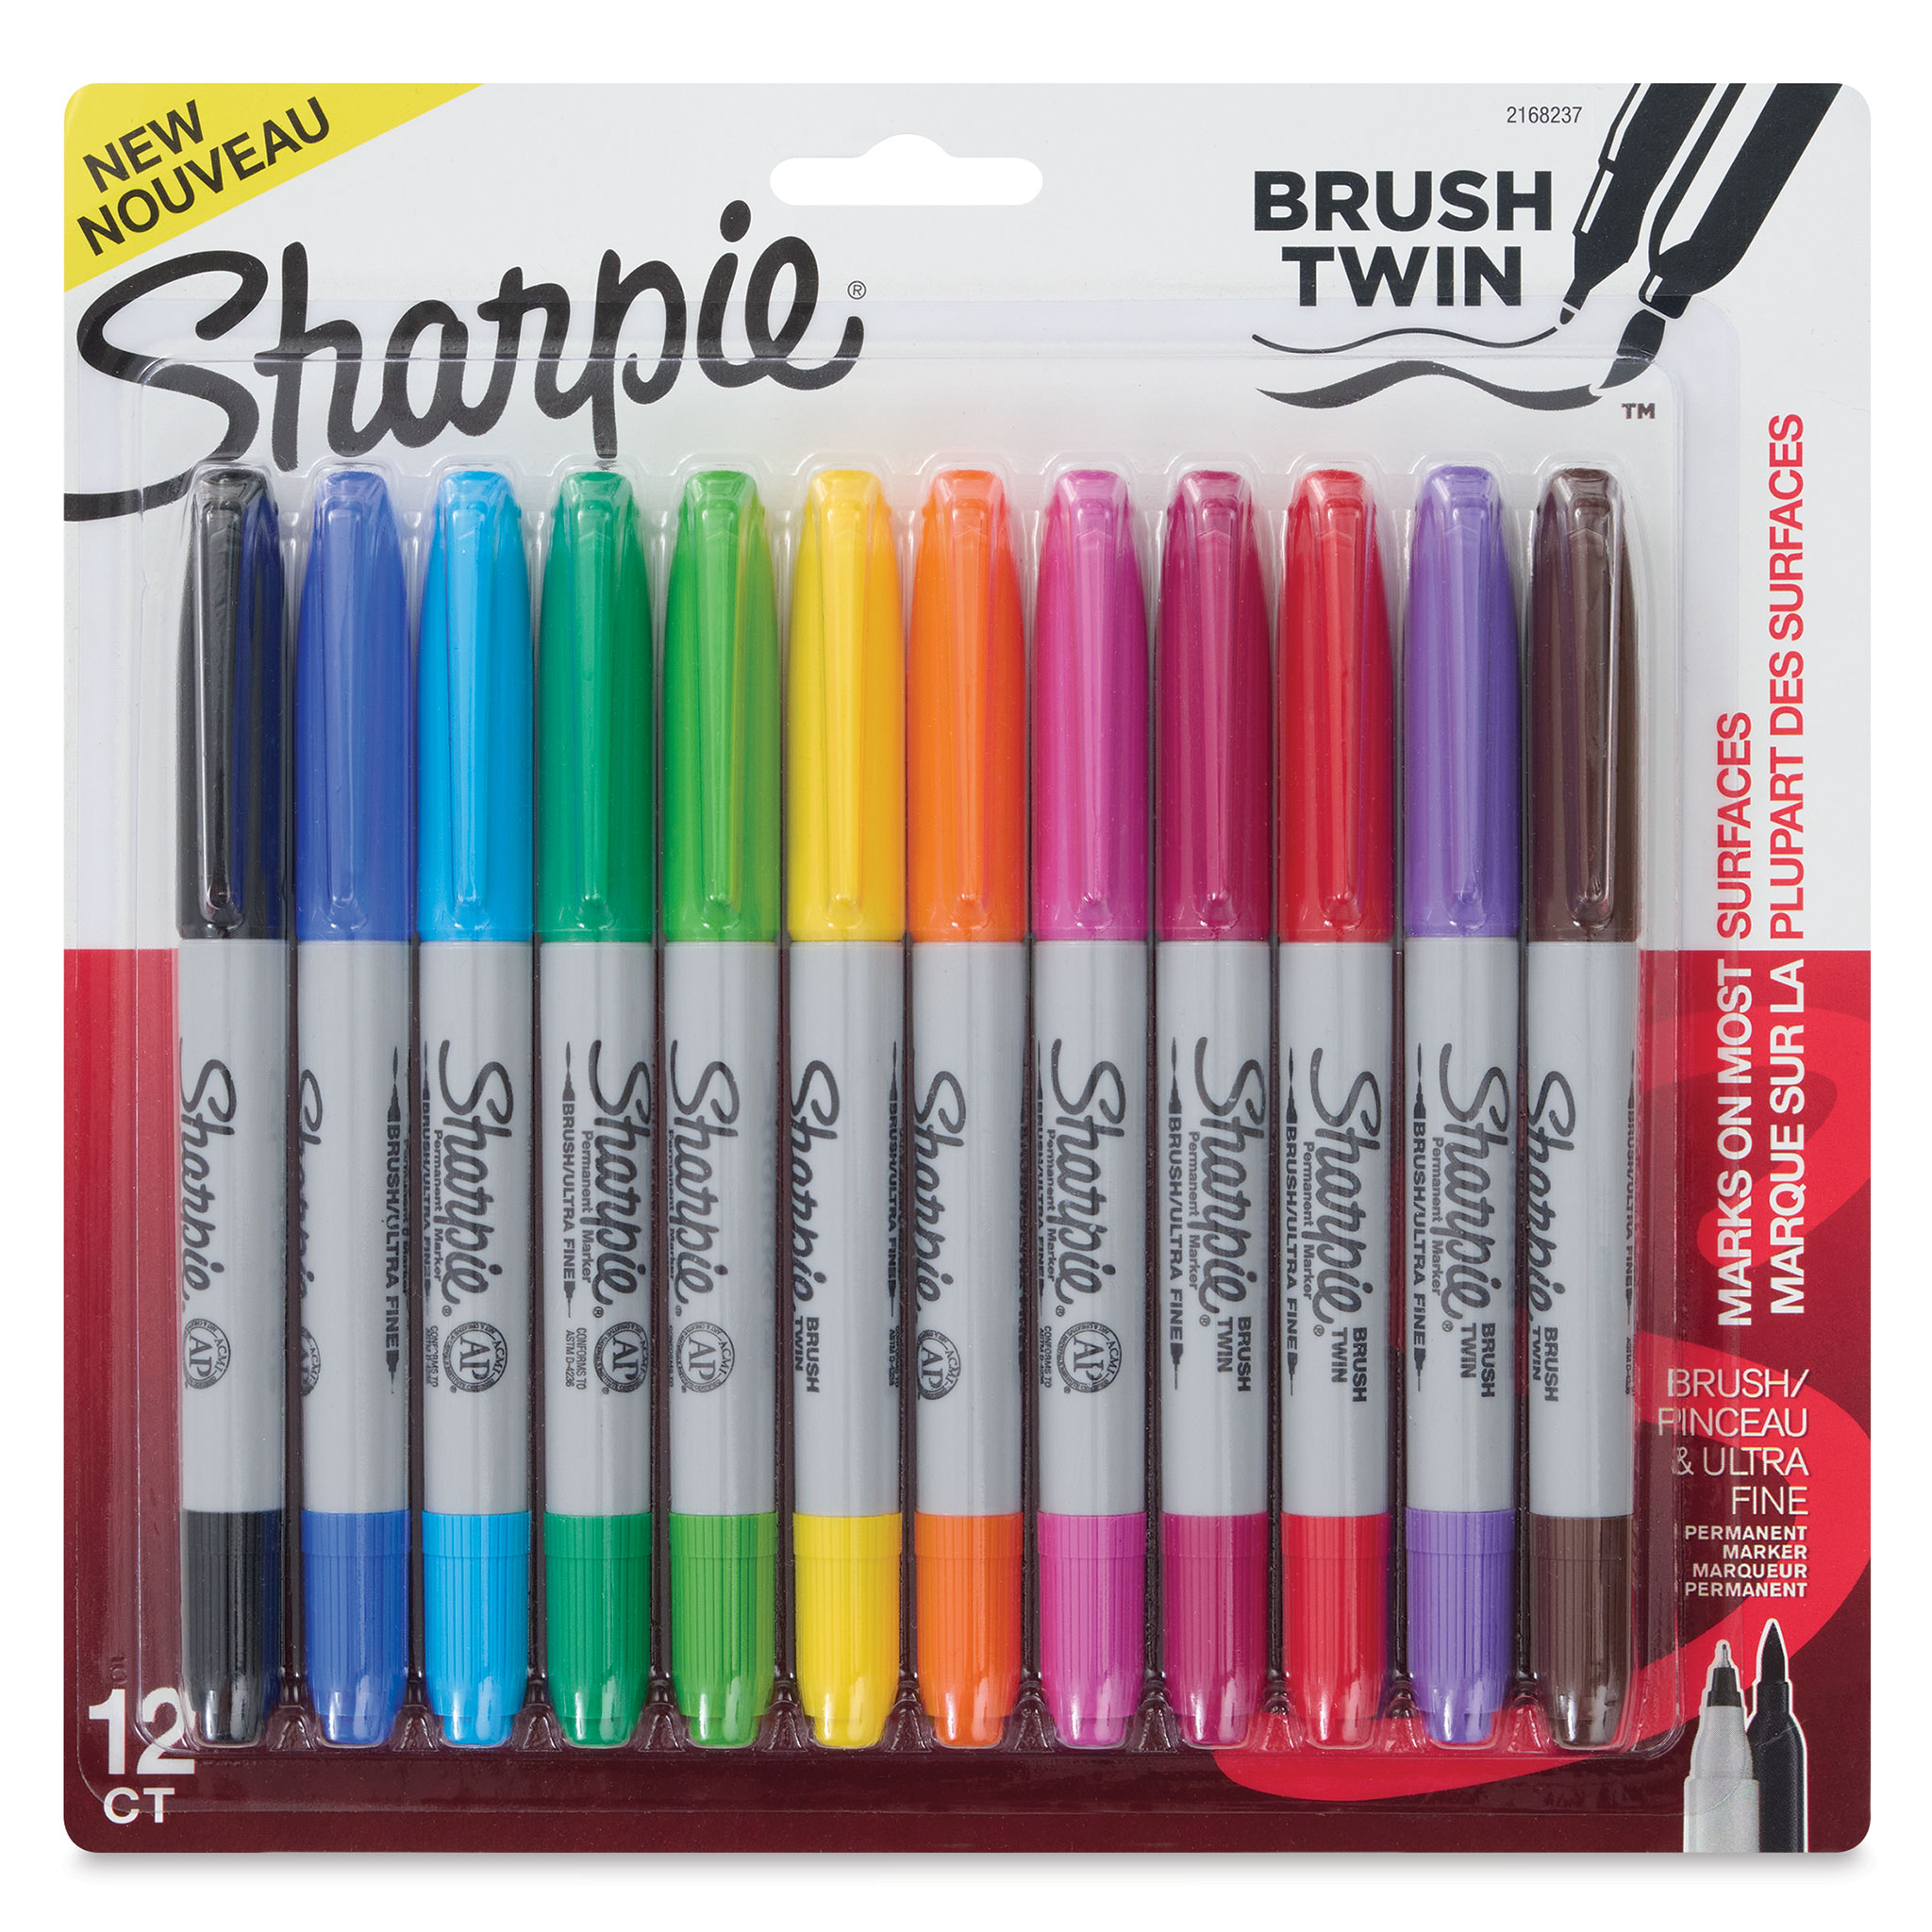 Sharpie Brush Twin Tip Marker Sets